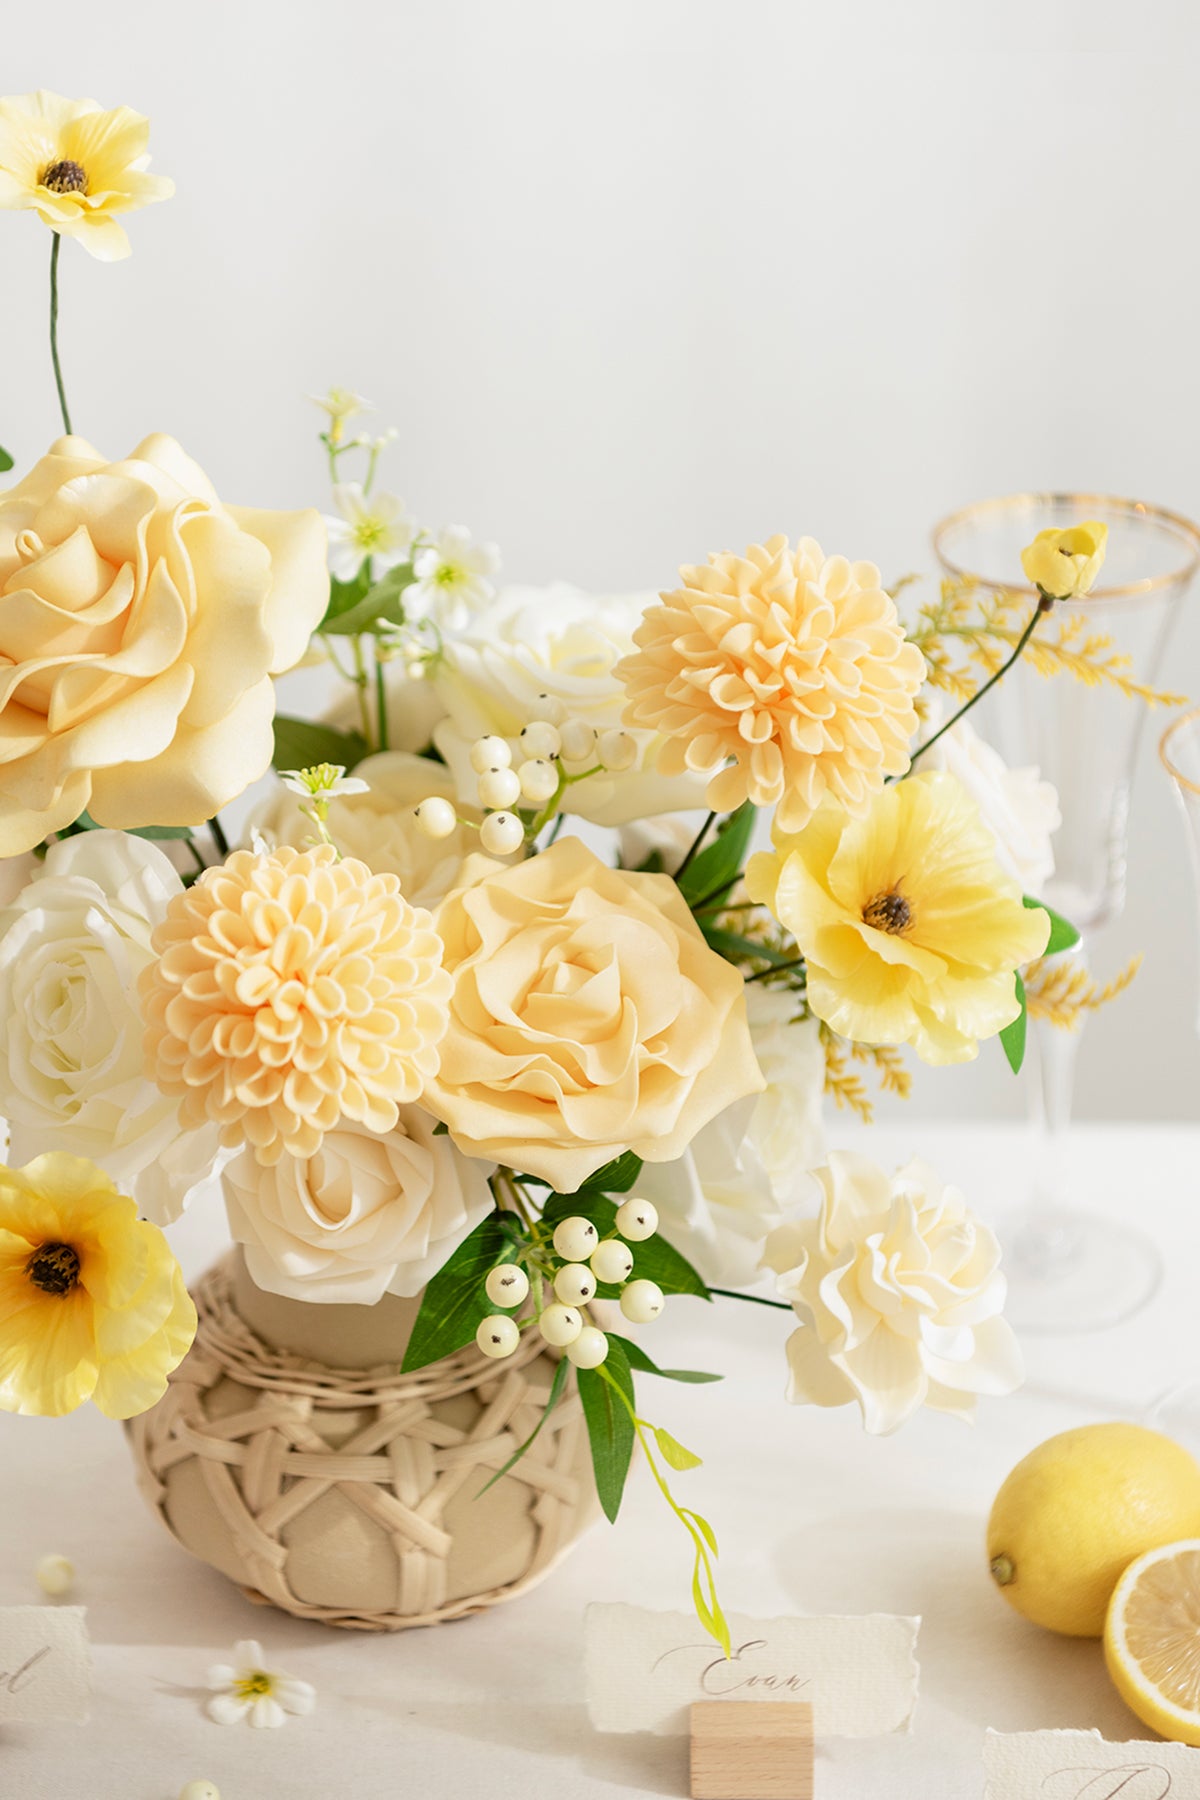 DIY Designer Flower Boxes in Lemonade Yellow